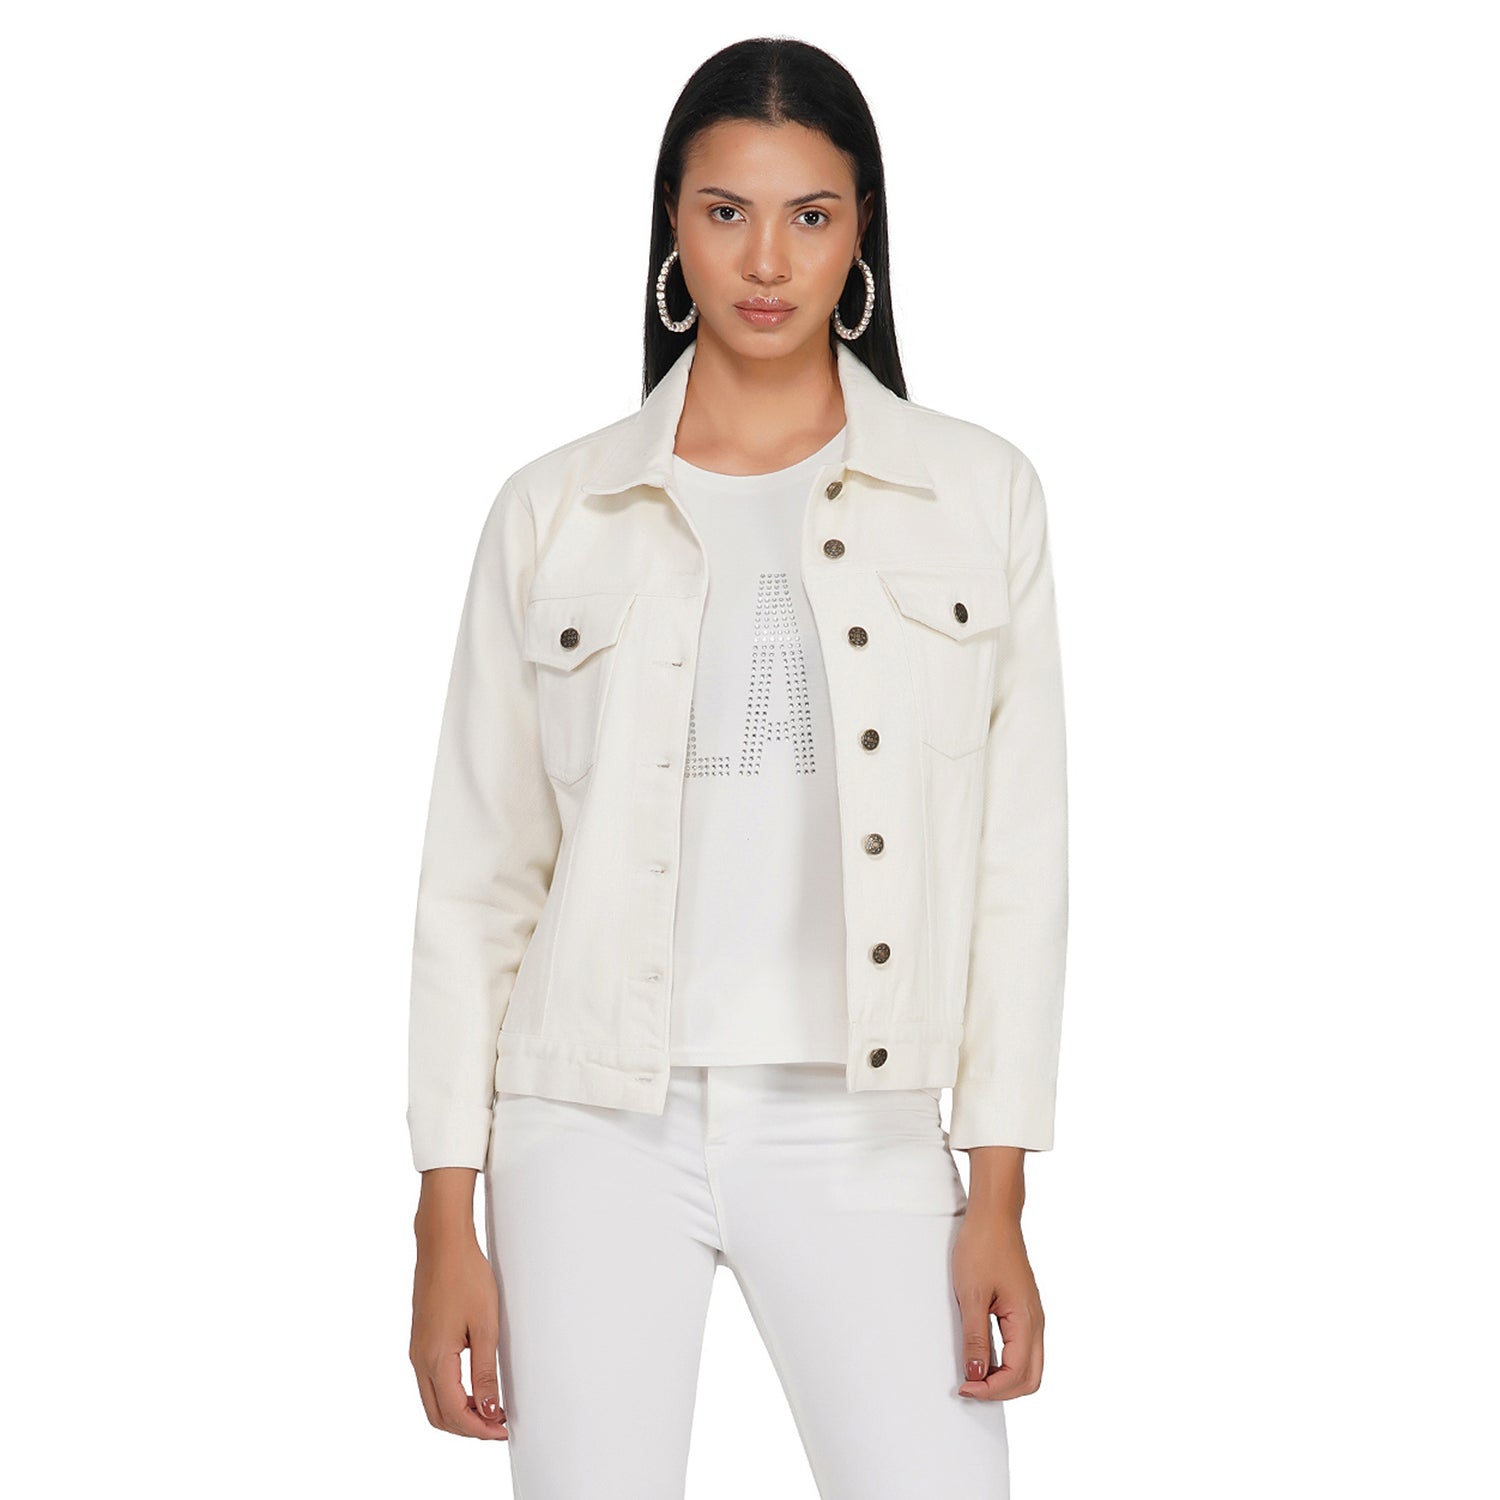 Off-White - Denim jacket for Woman - Blue - OWYE041S23DEN001-4000 |  FRMODA.COM